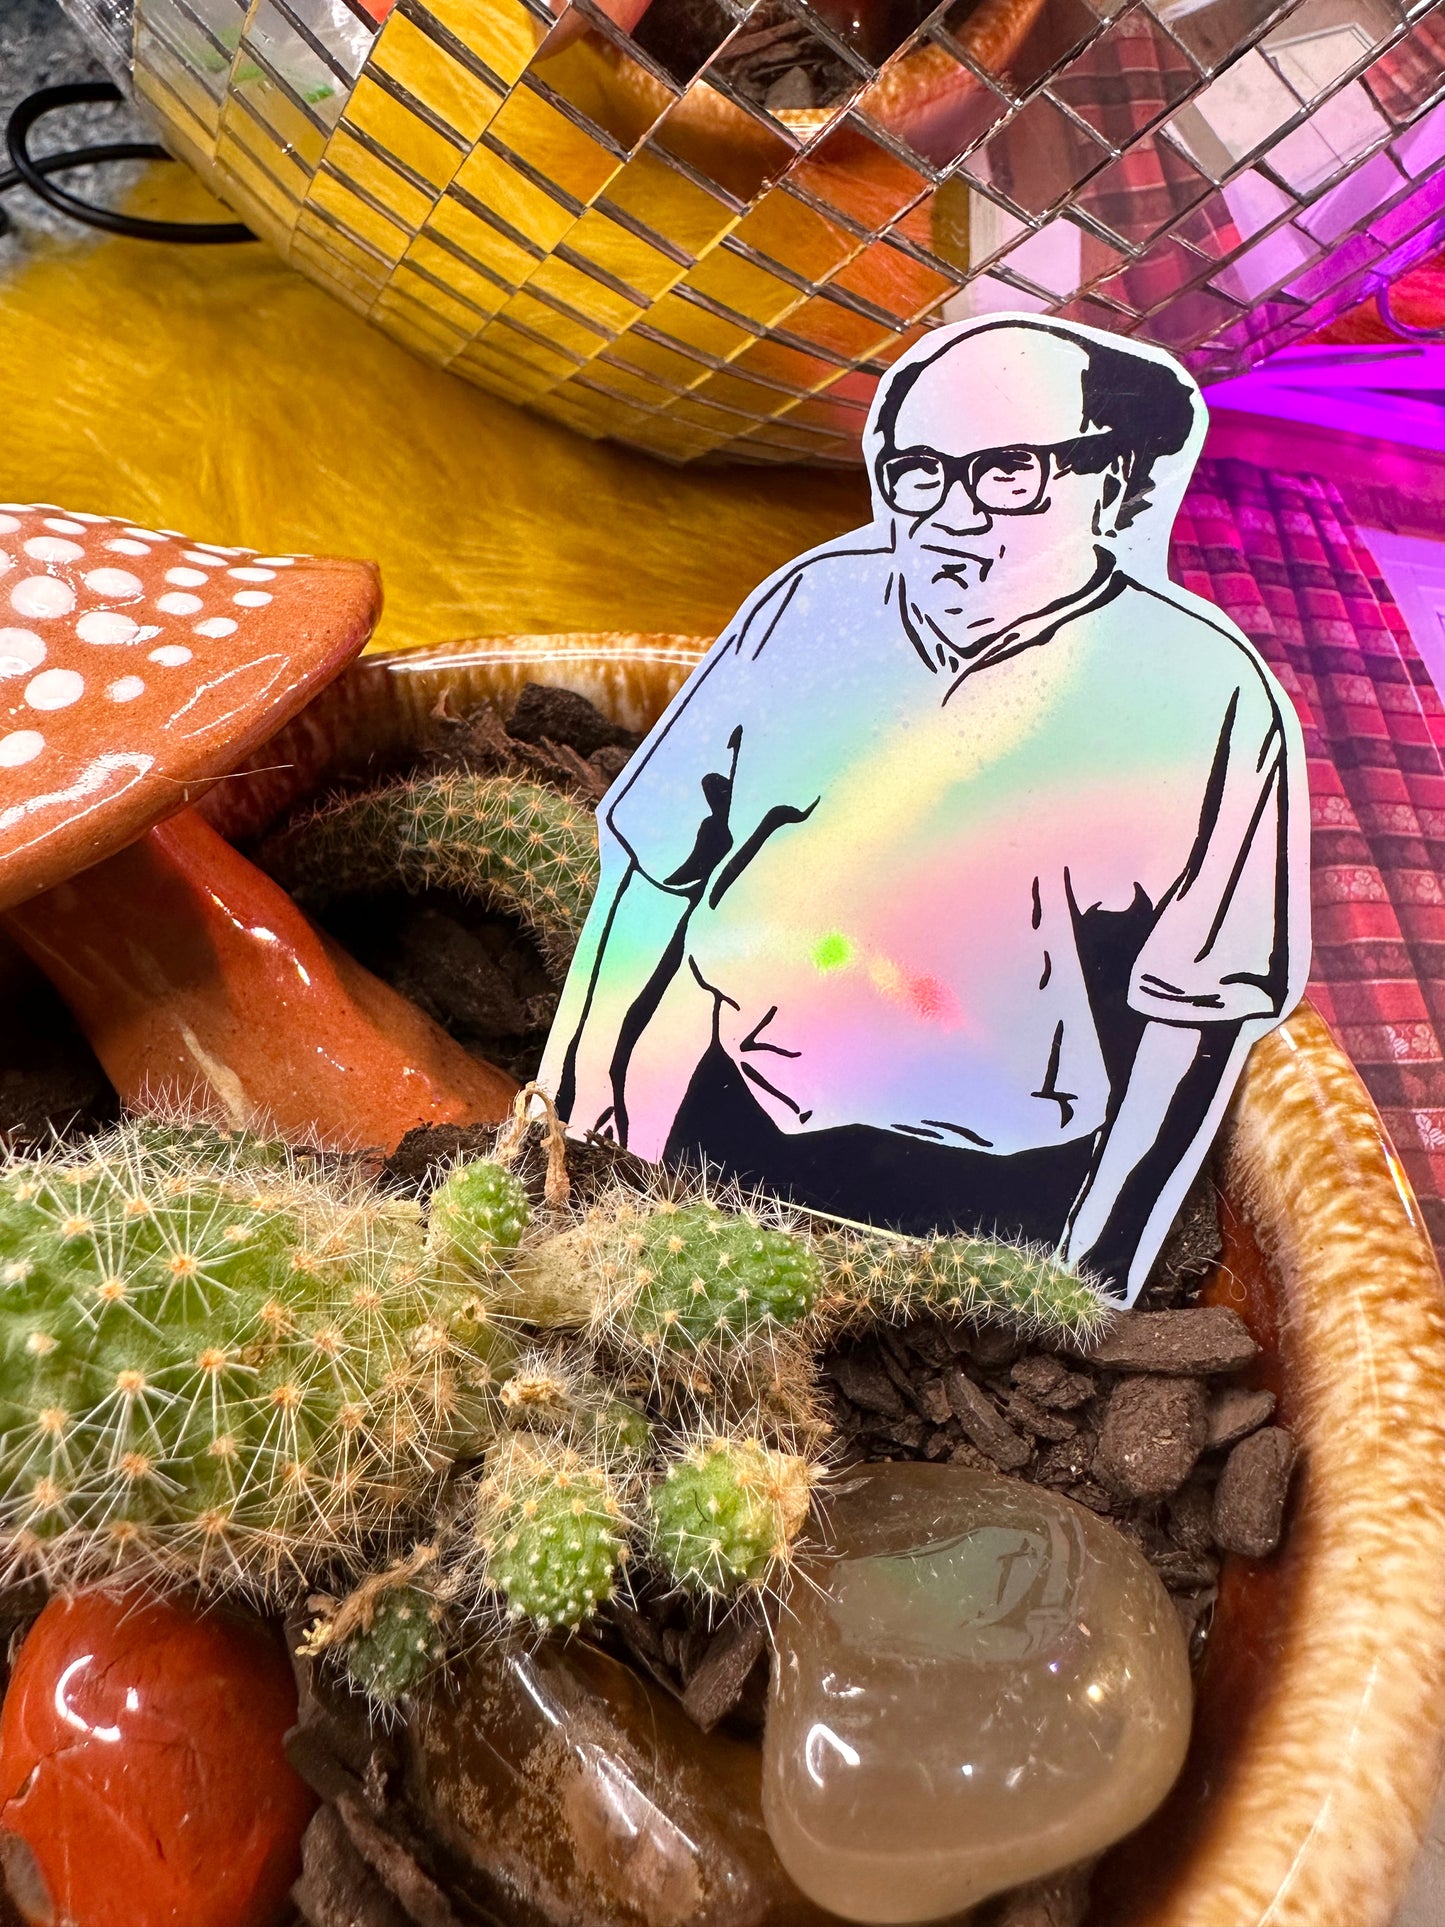 Frank - Always sunny in Philadelphia Holographic sticker